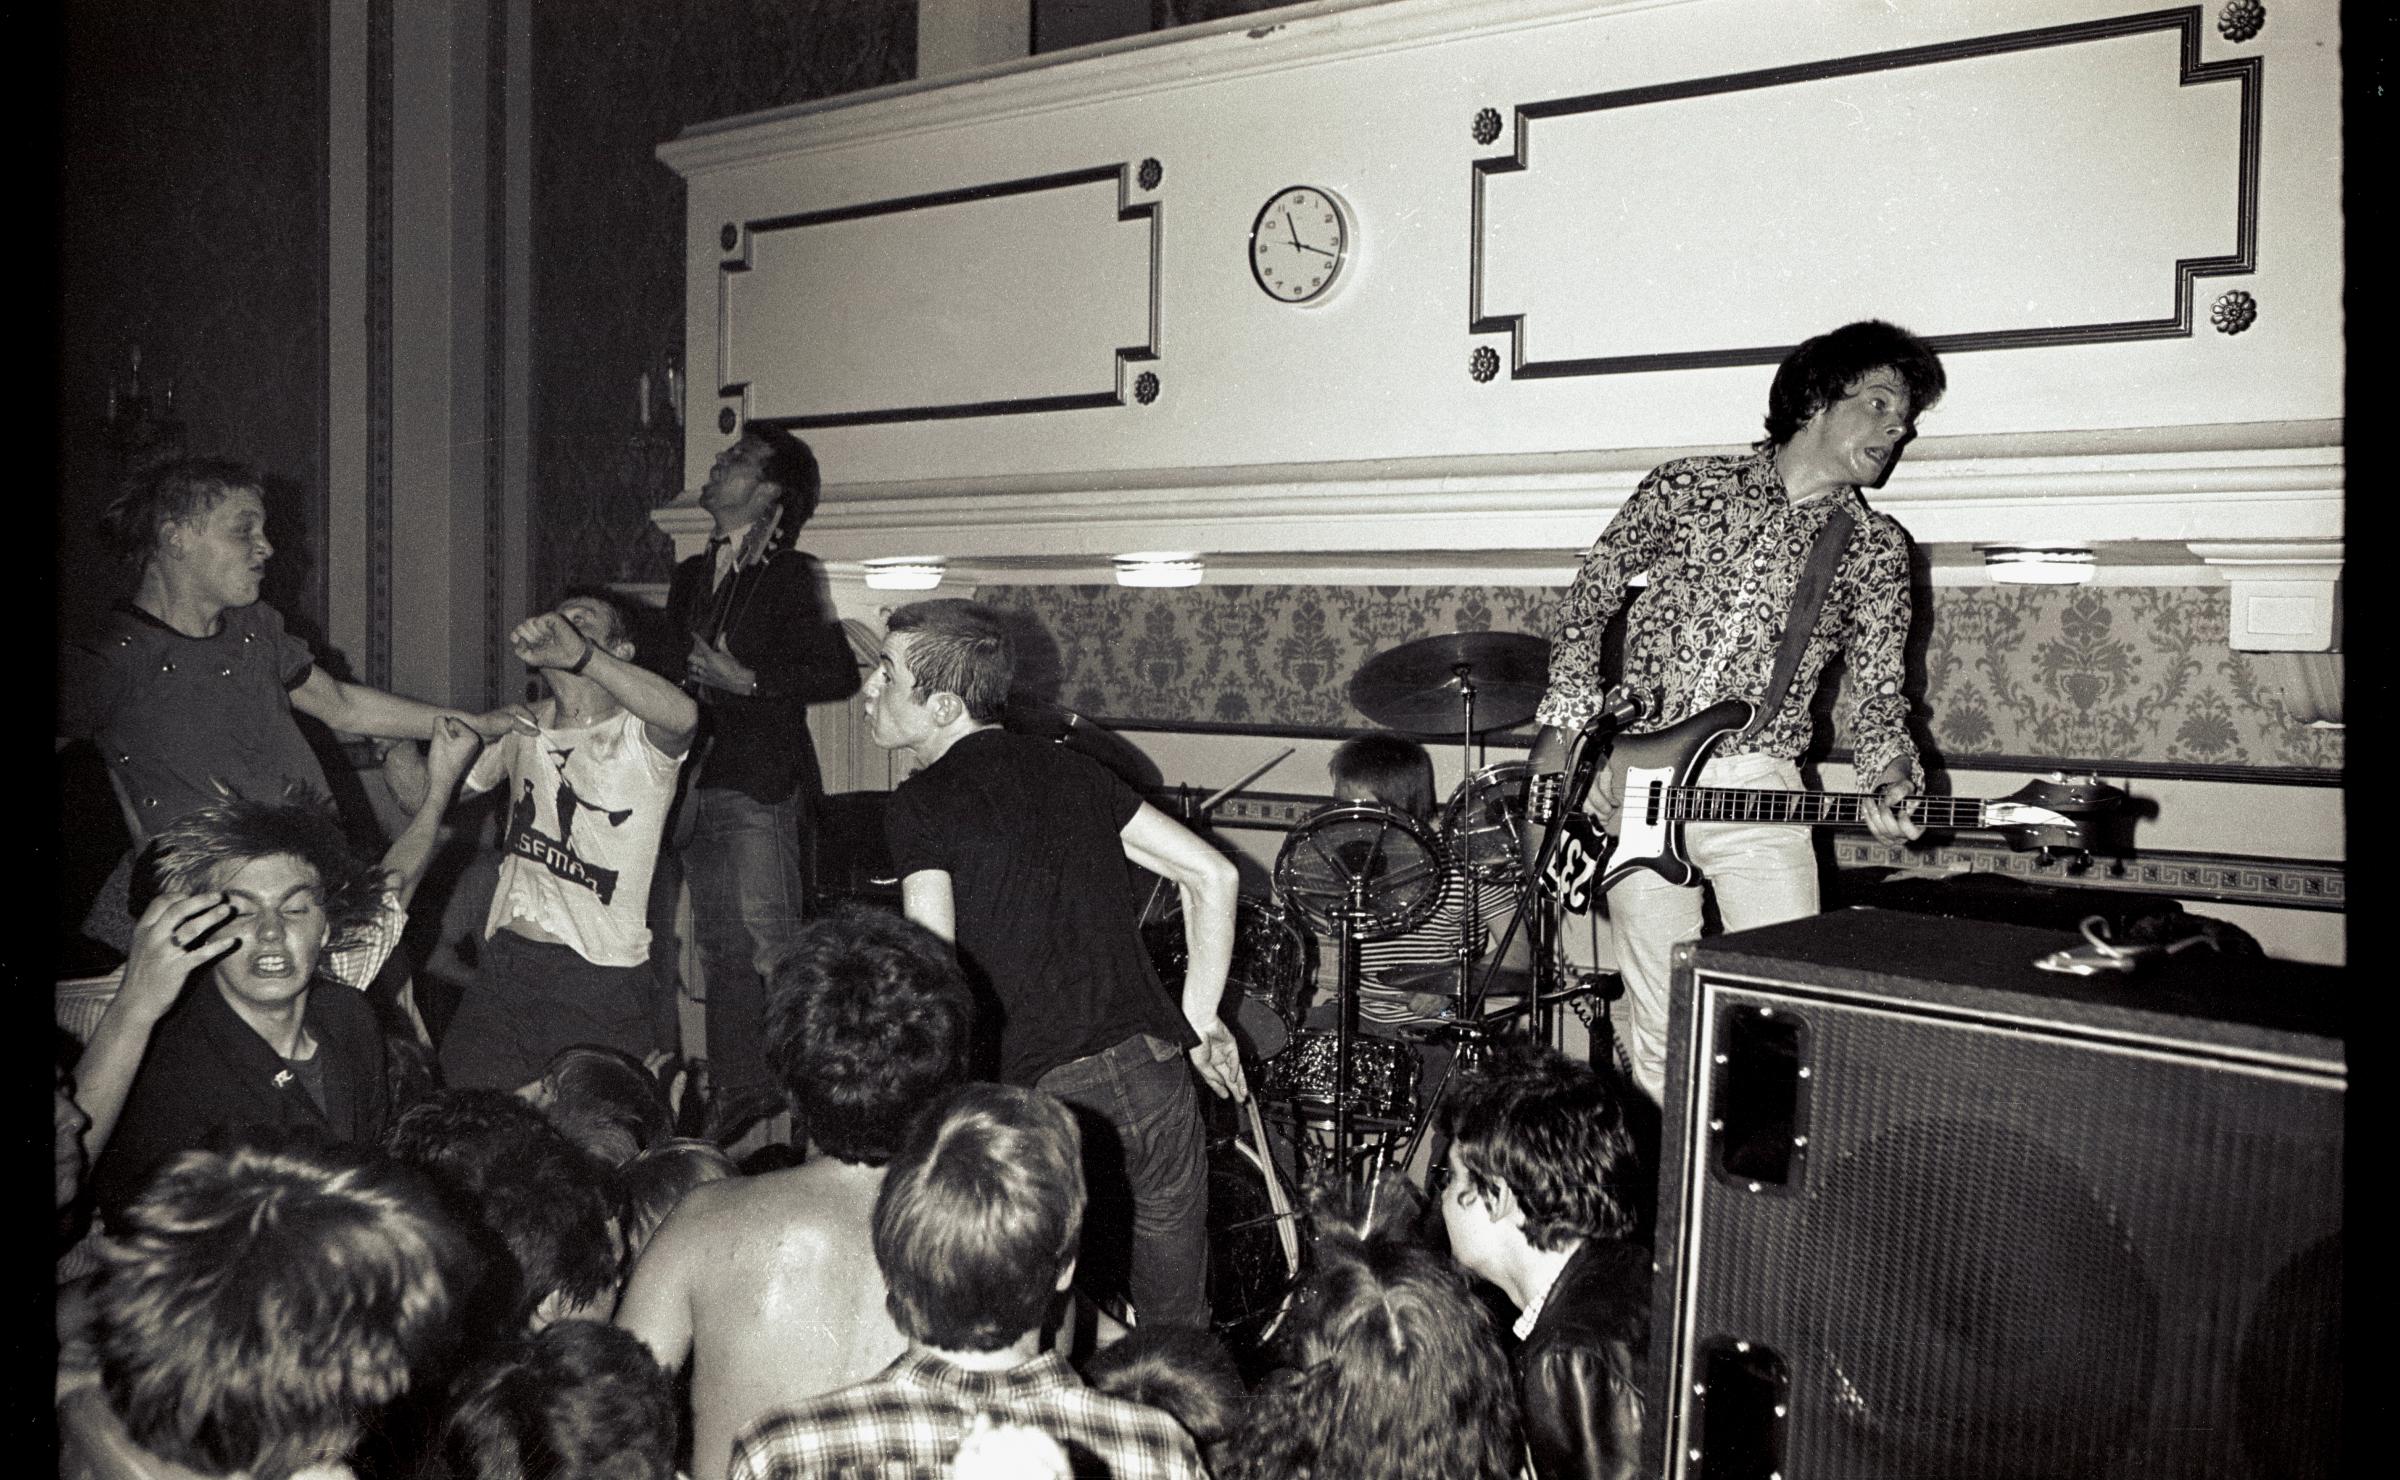 York Punk 1977 exhibition to recall city's music scene 45 years ago